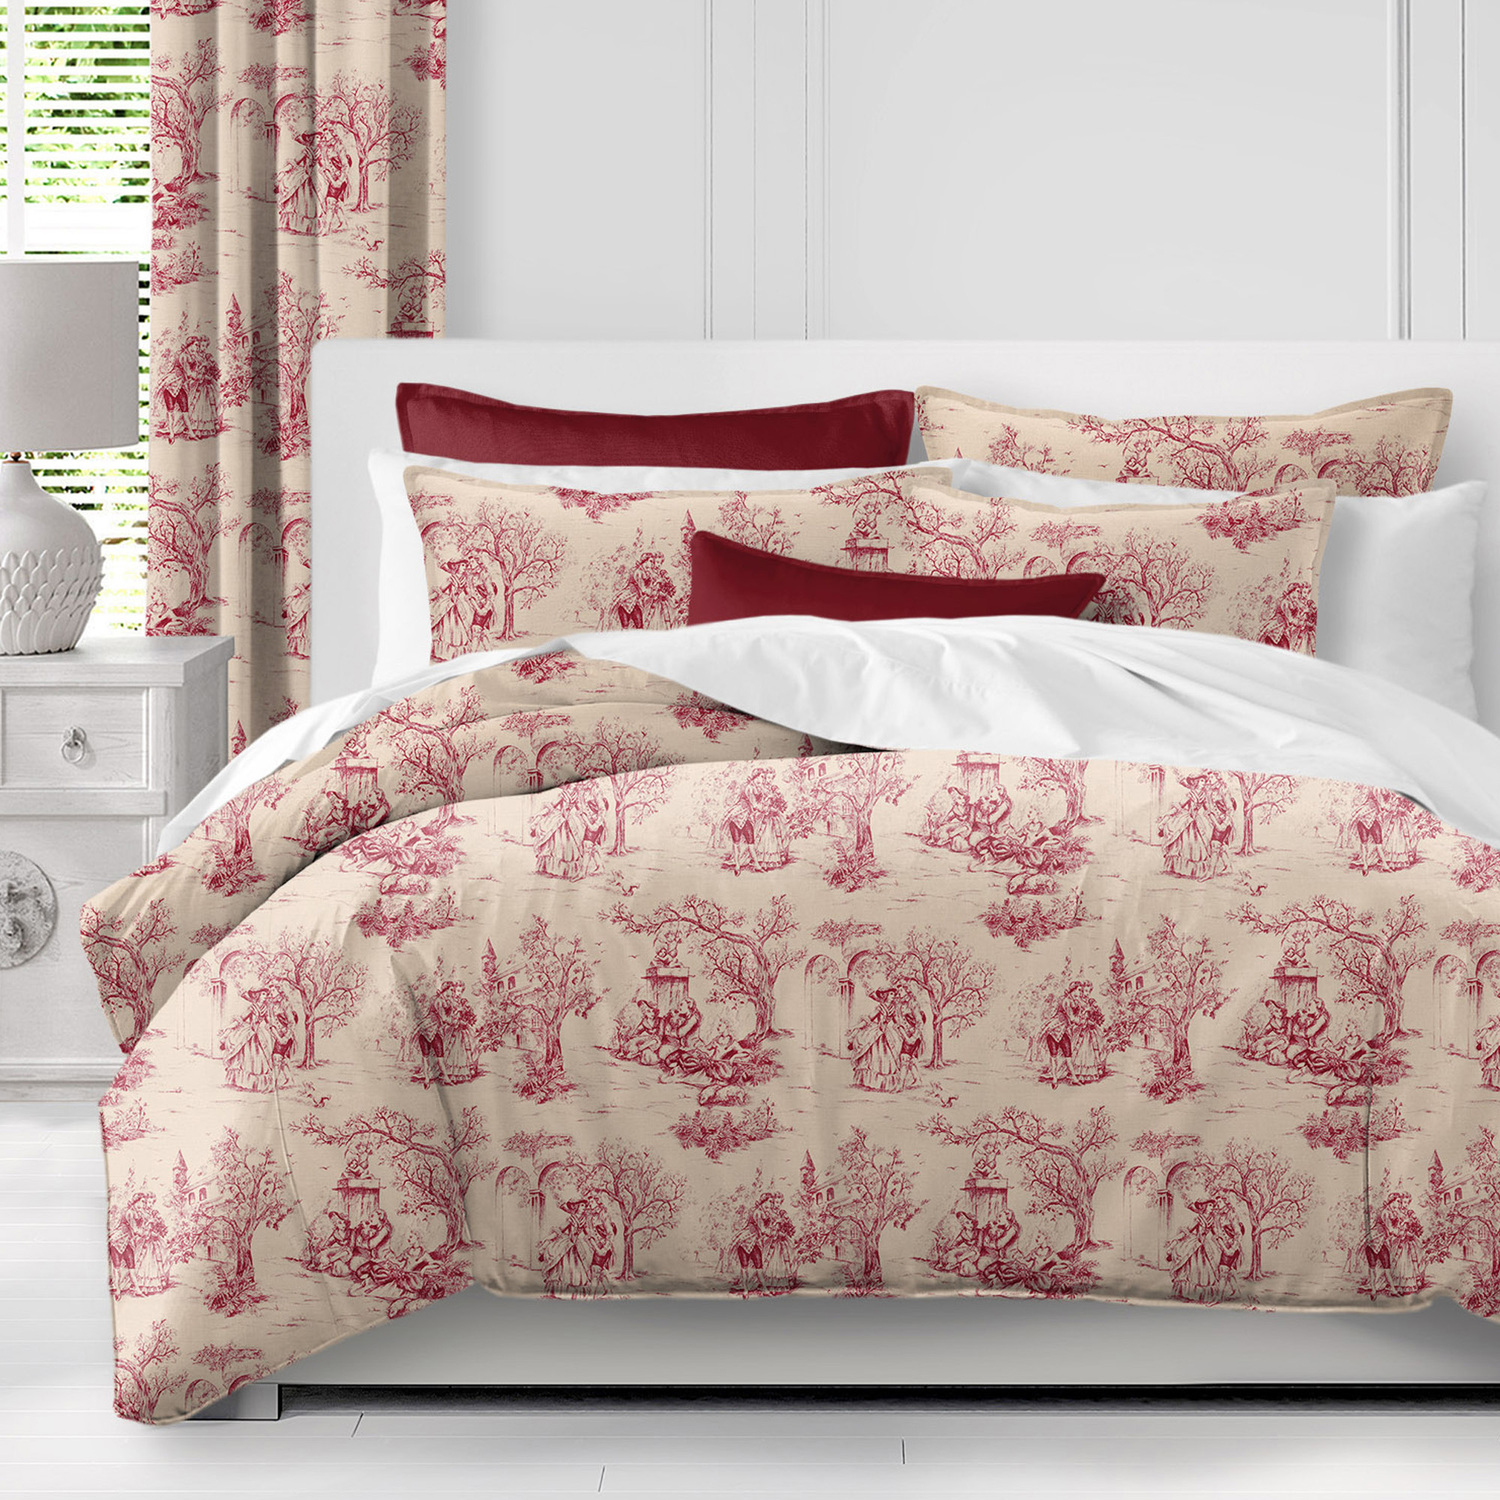 SALE] Supreme White Logo Red Luxury Brand Bedding Set Duvet Cover